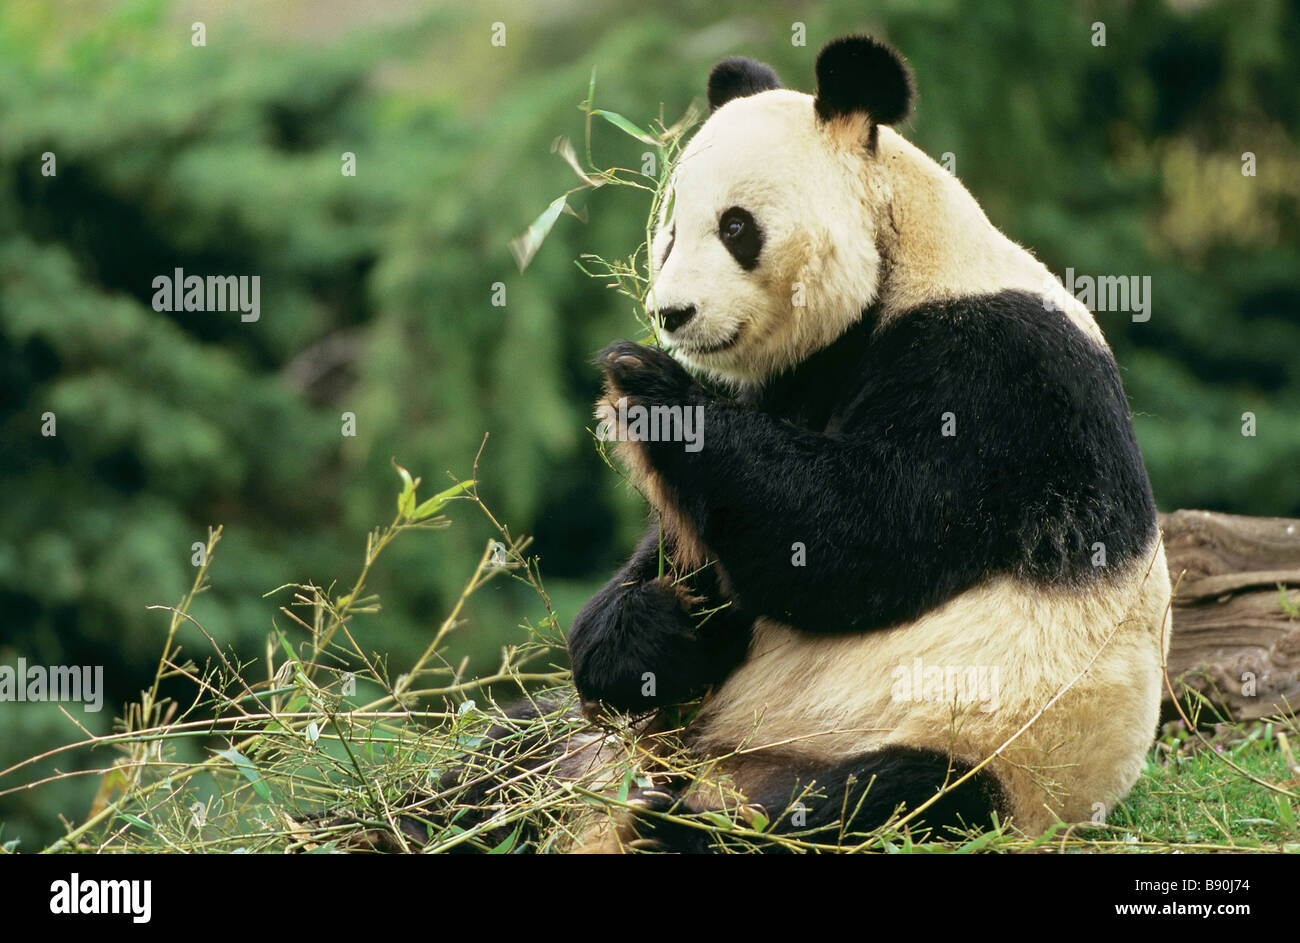 Giant Panda bear munching bamboo / Ailuropoda melanoleuca Stock Photo